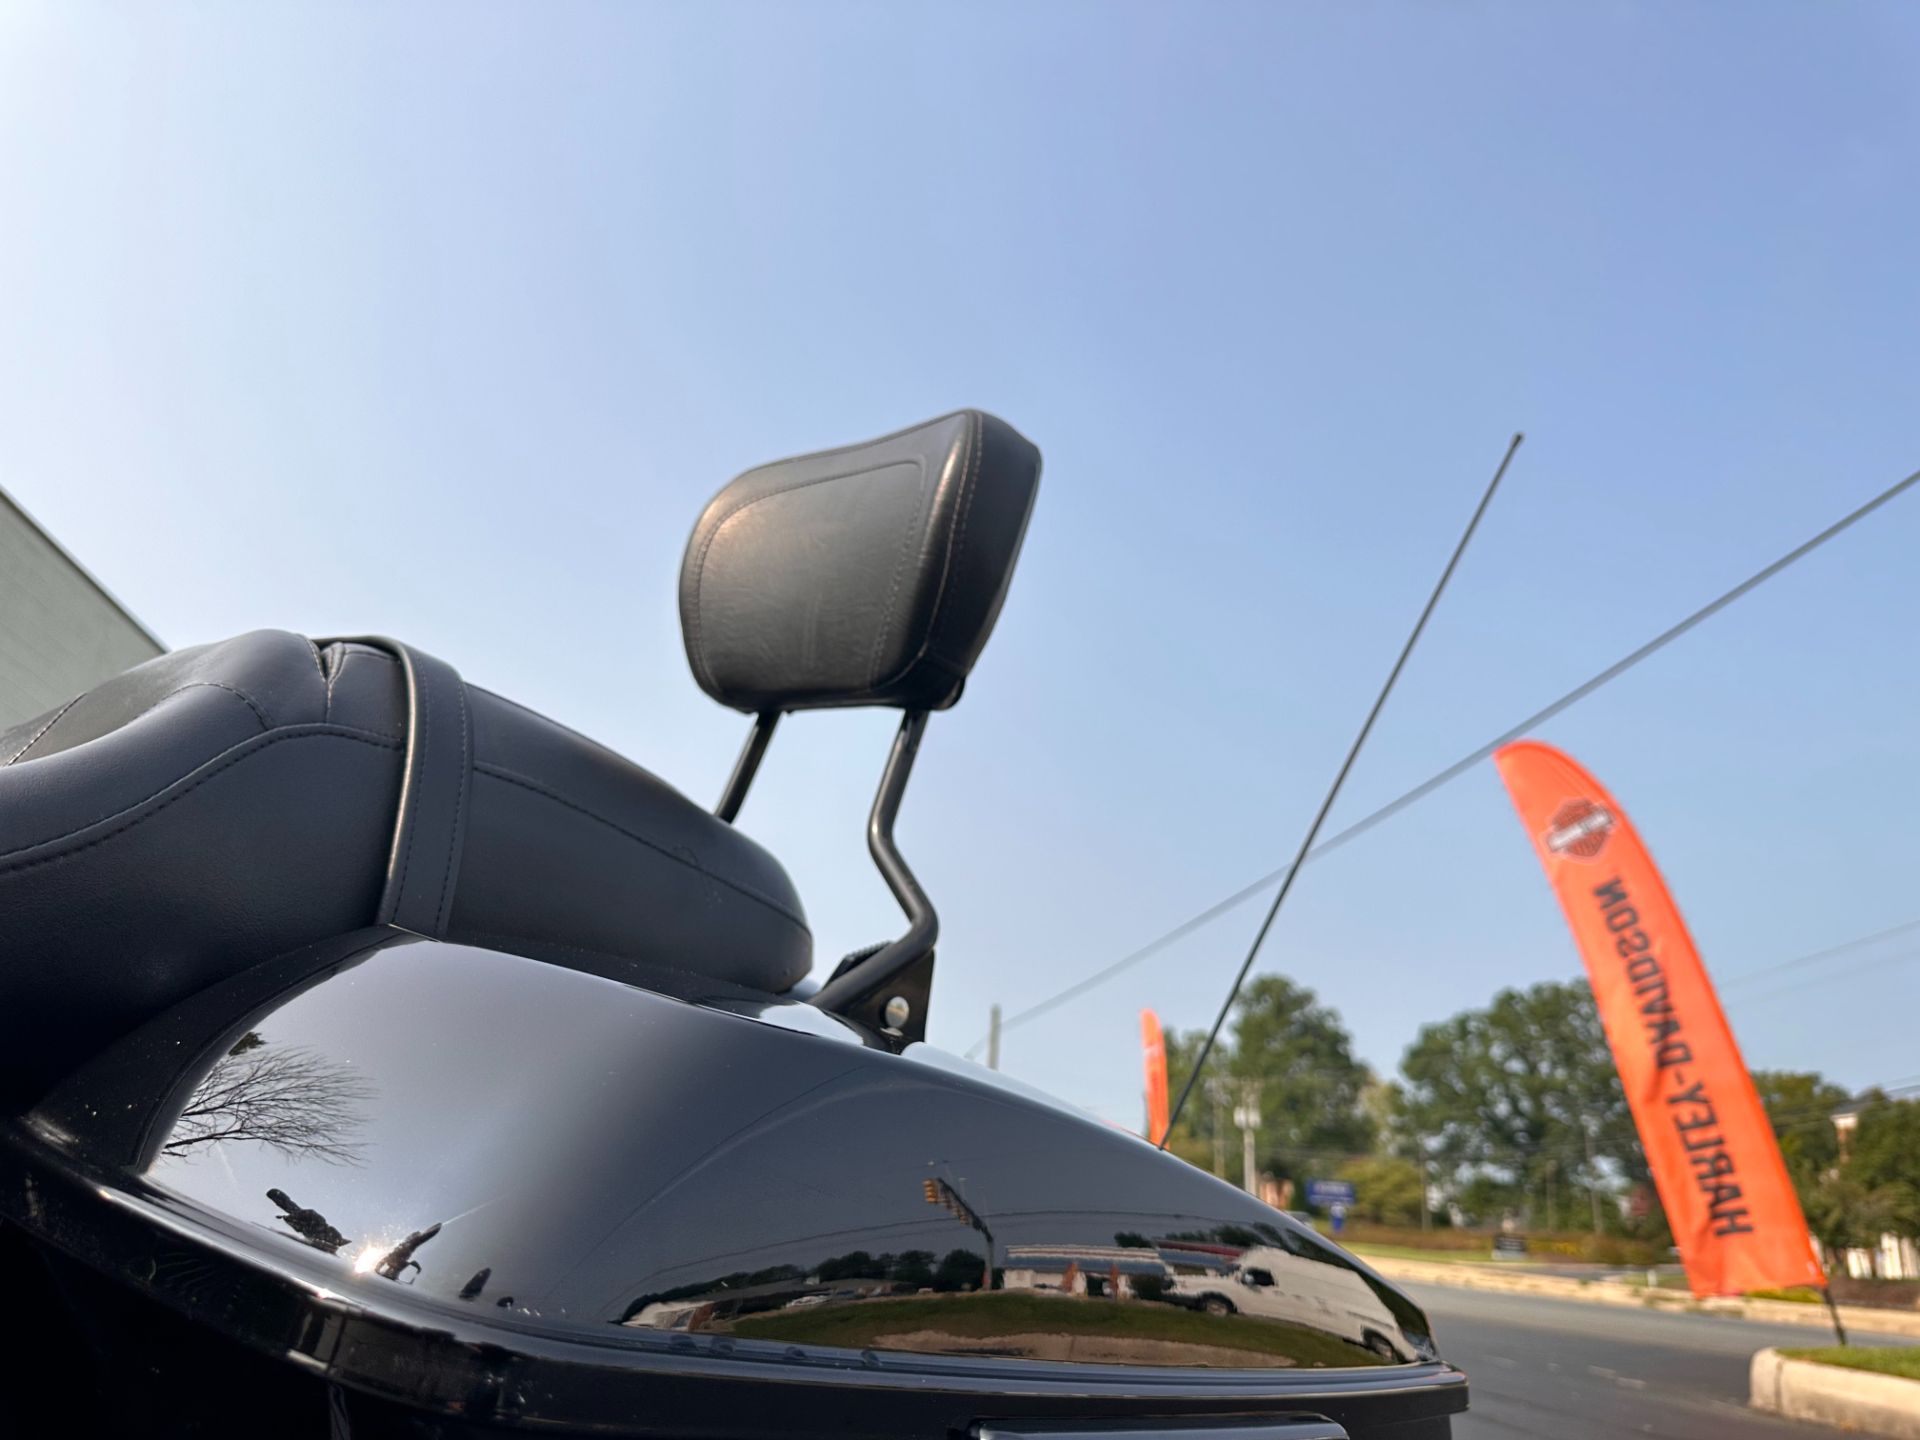 2019 Harley-Davidson Street Glide® Special in Lynchburg, Virginia - Photo 15